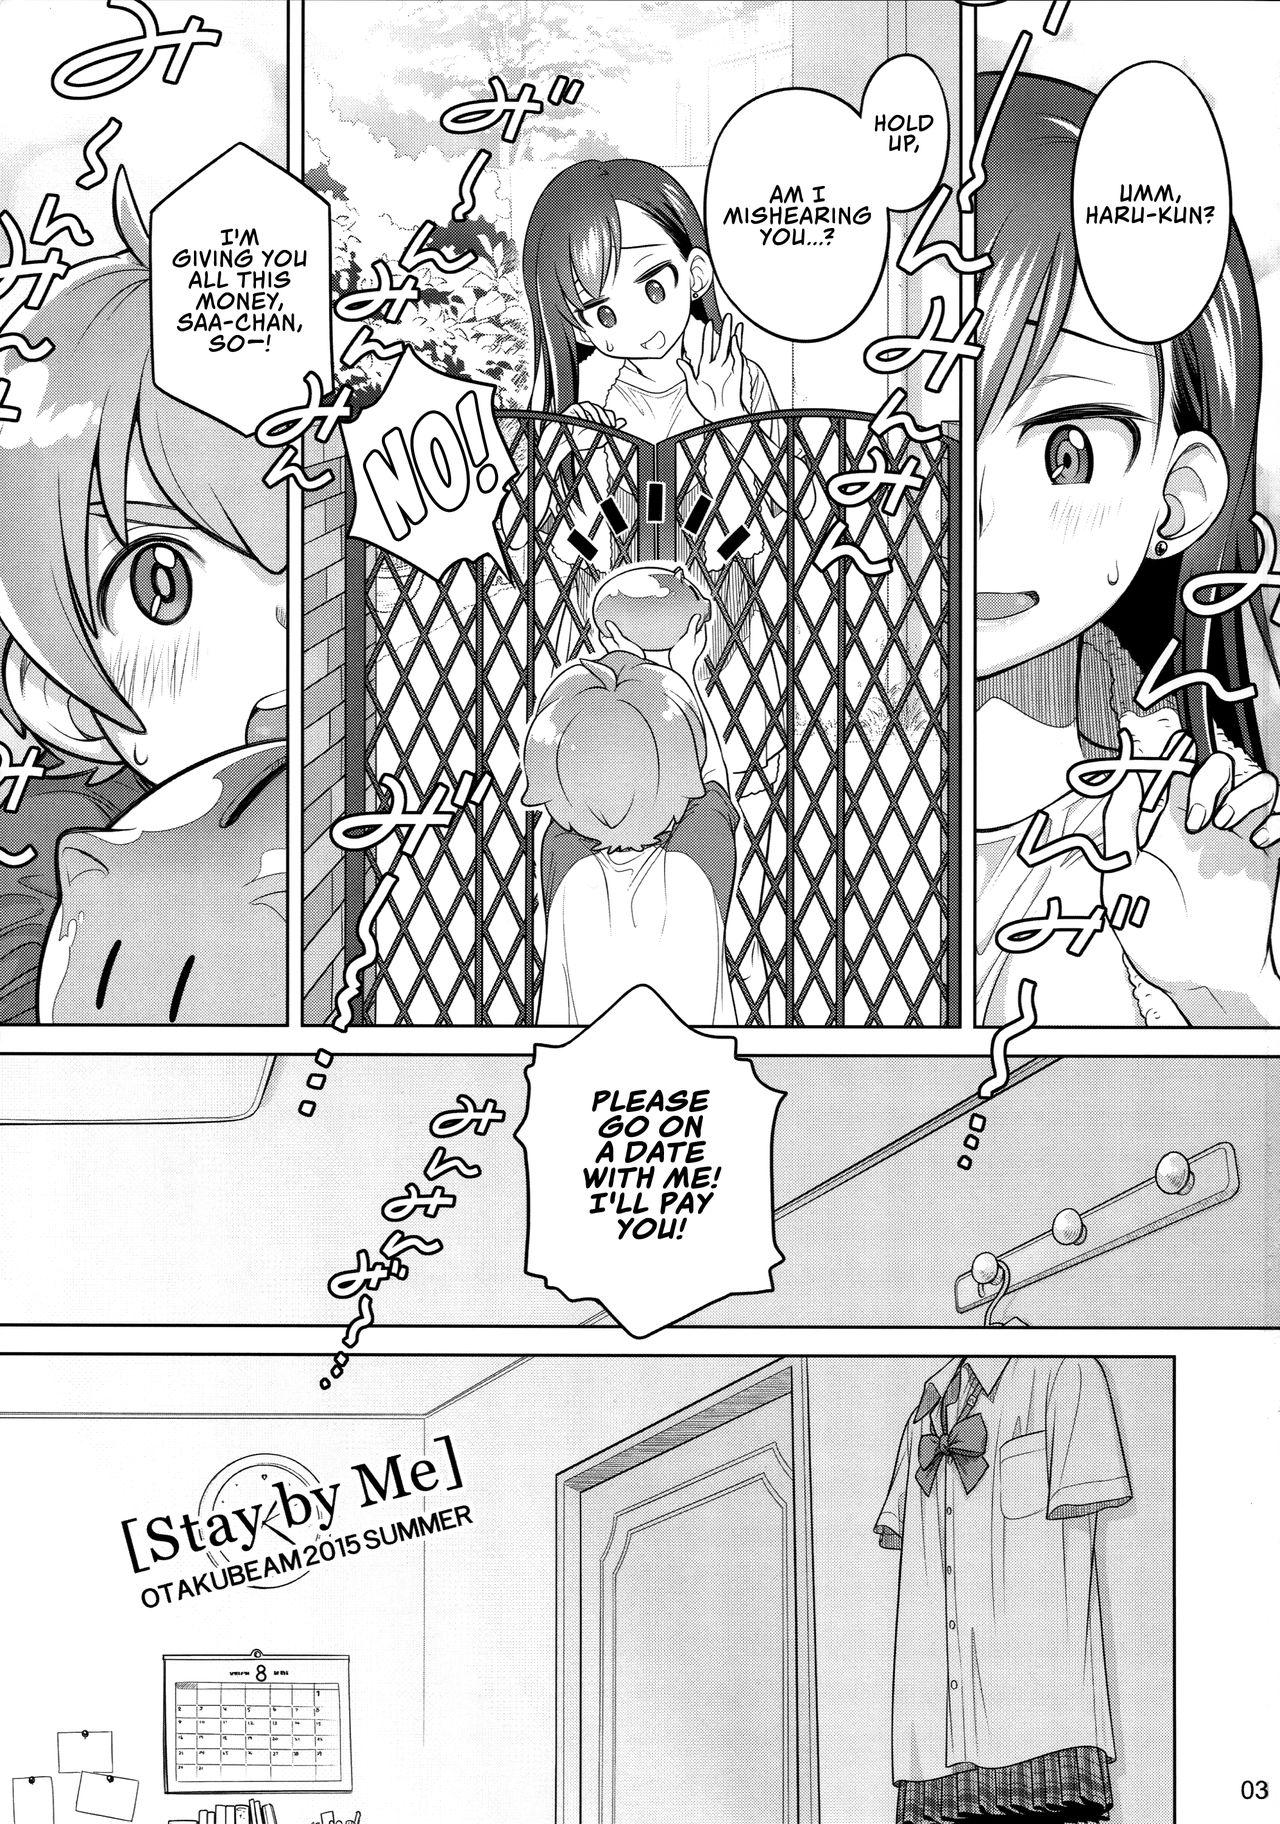 Nudist Stay by me - Original Kashima - Page 3